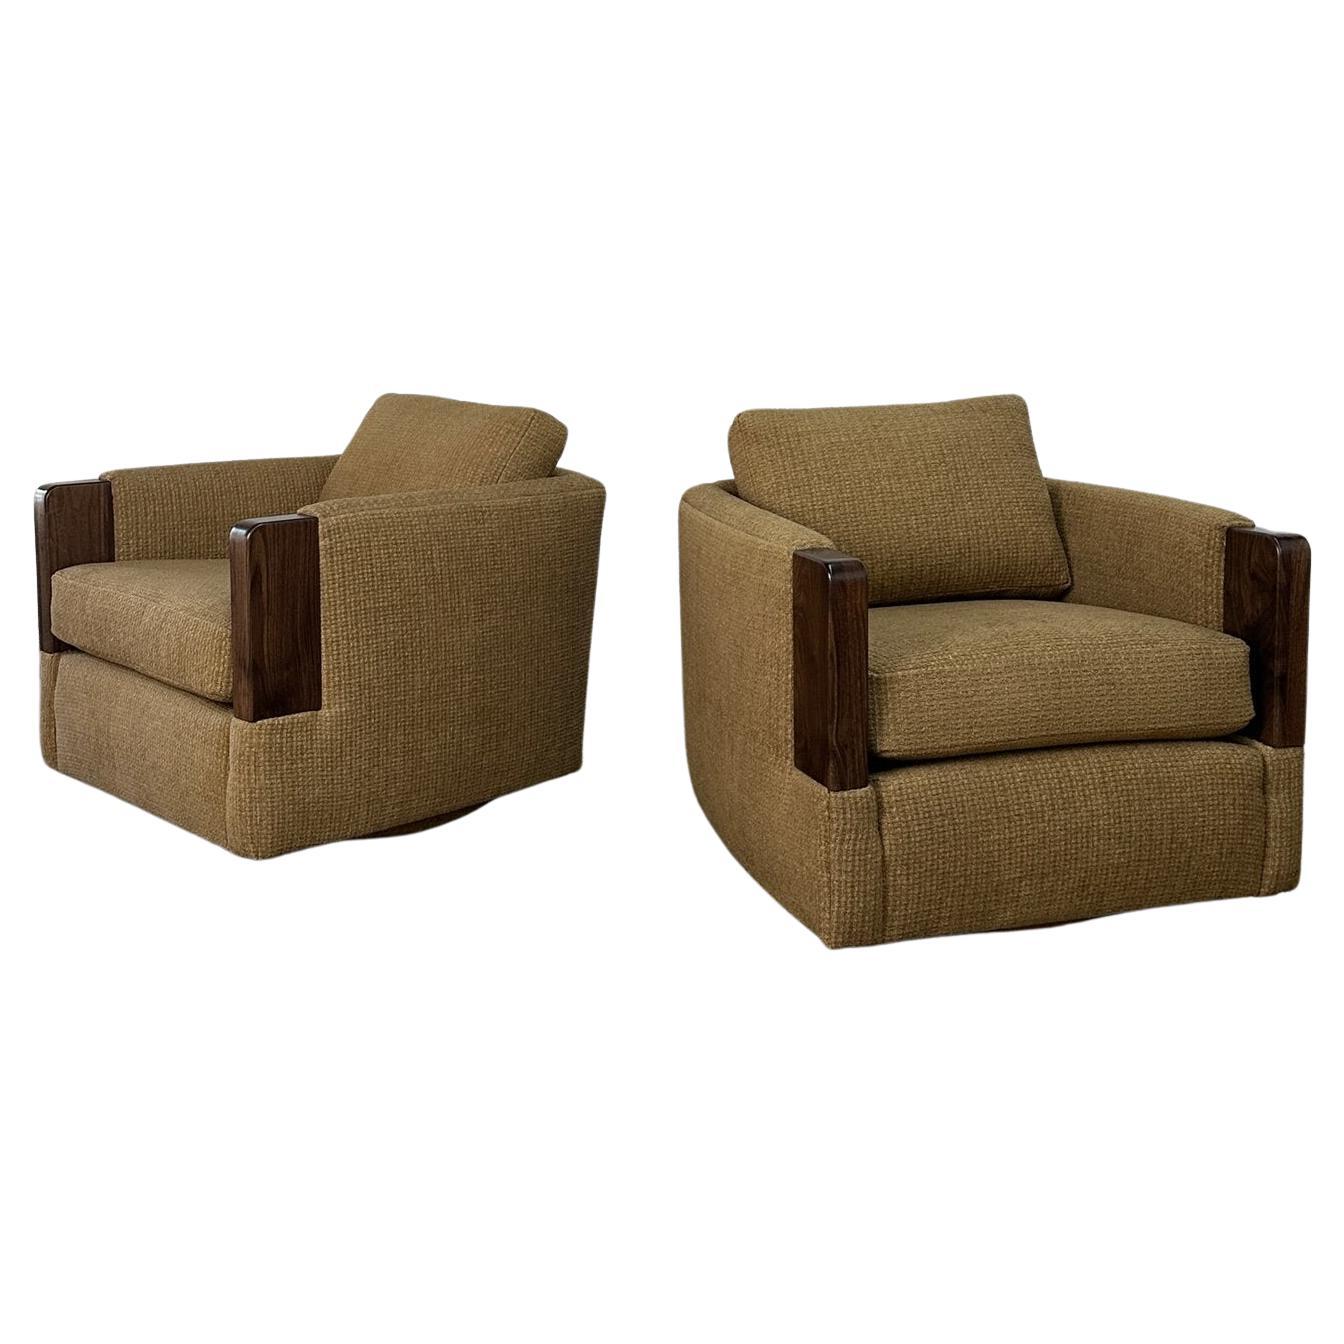 Vintage custom swivel chairs -pair For Sale